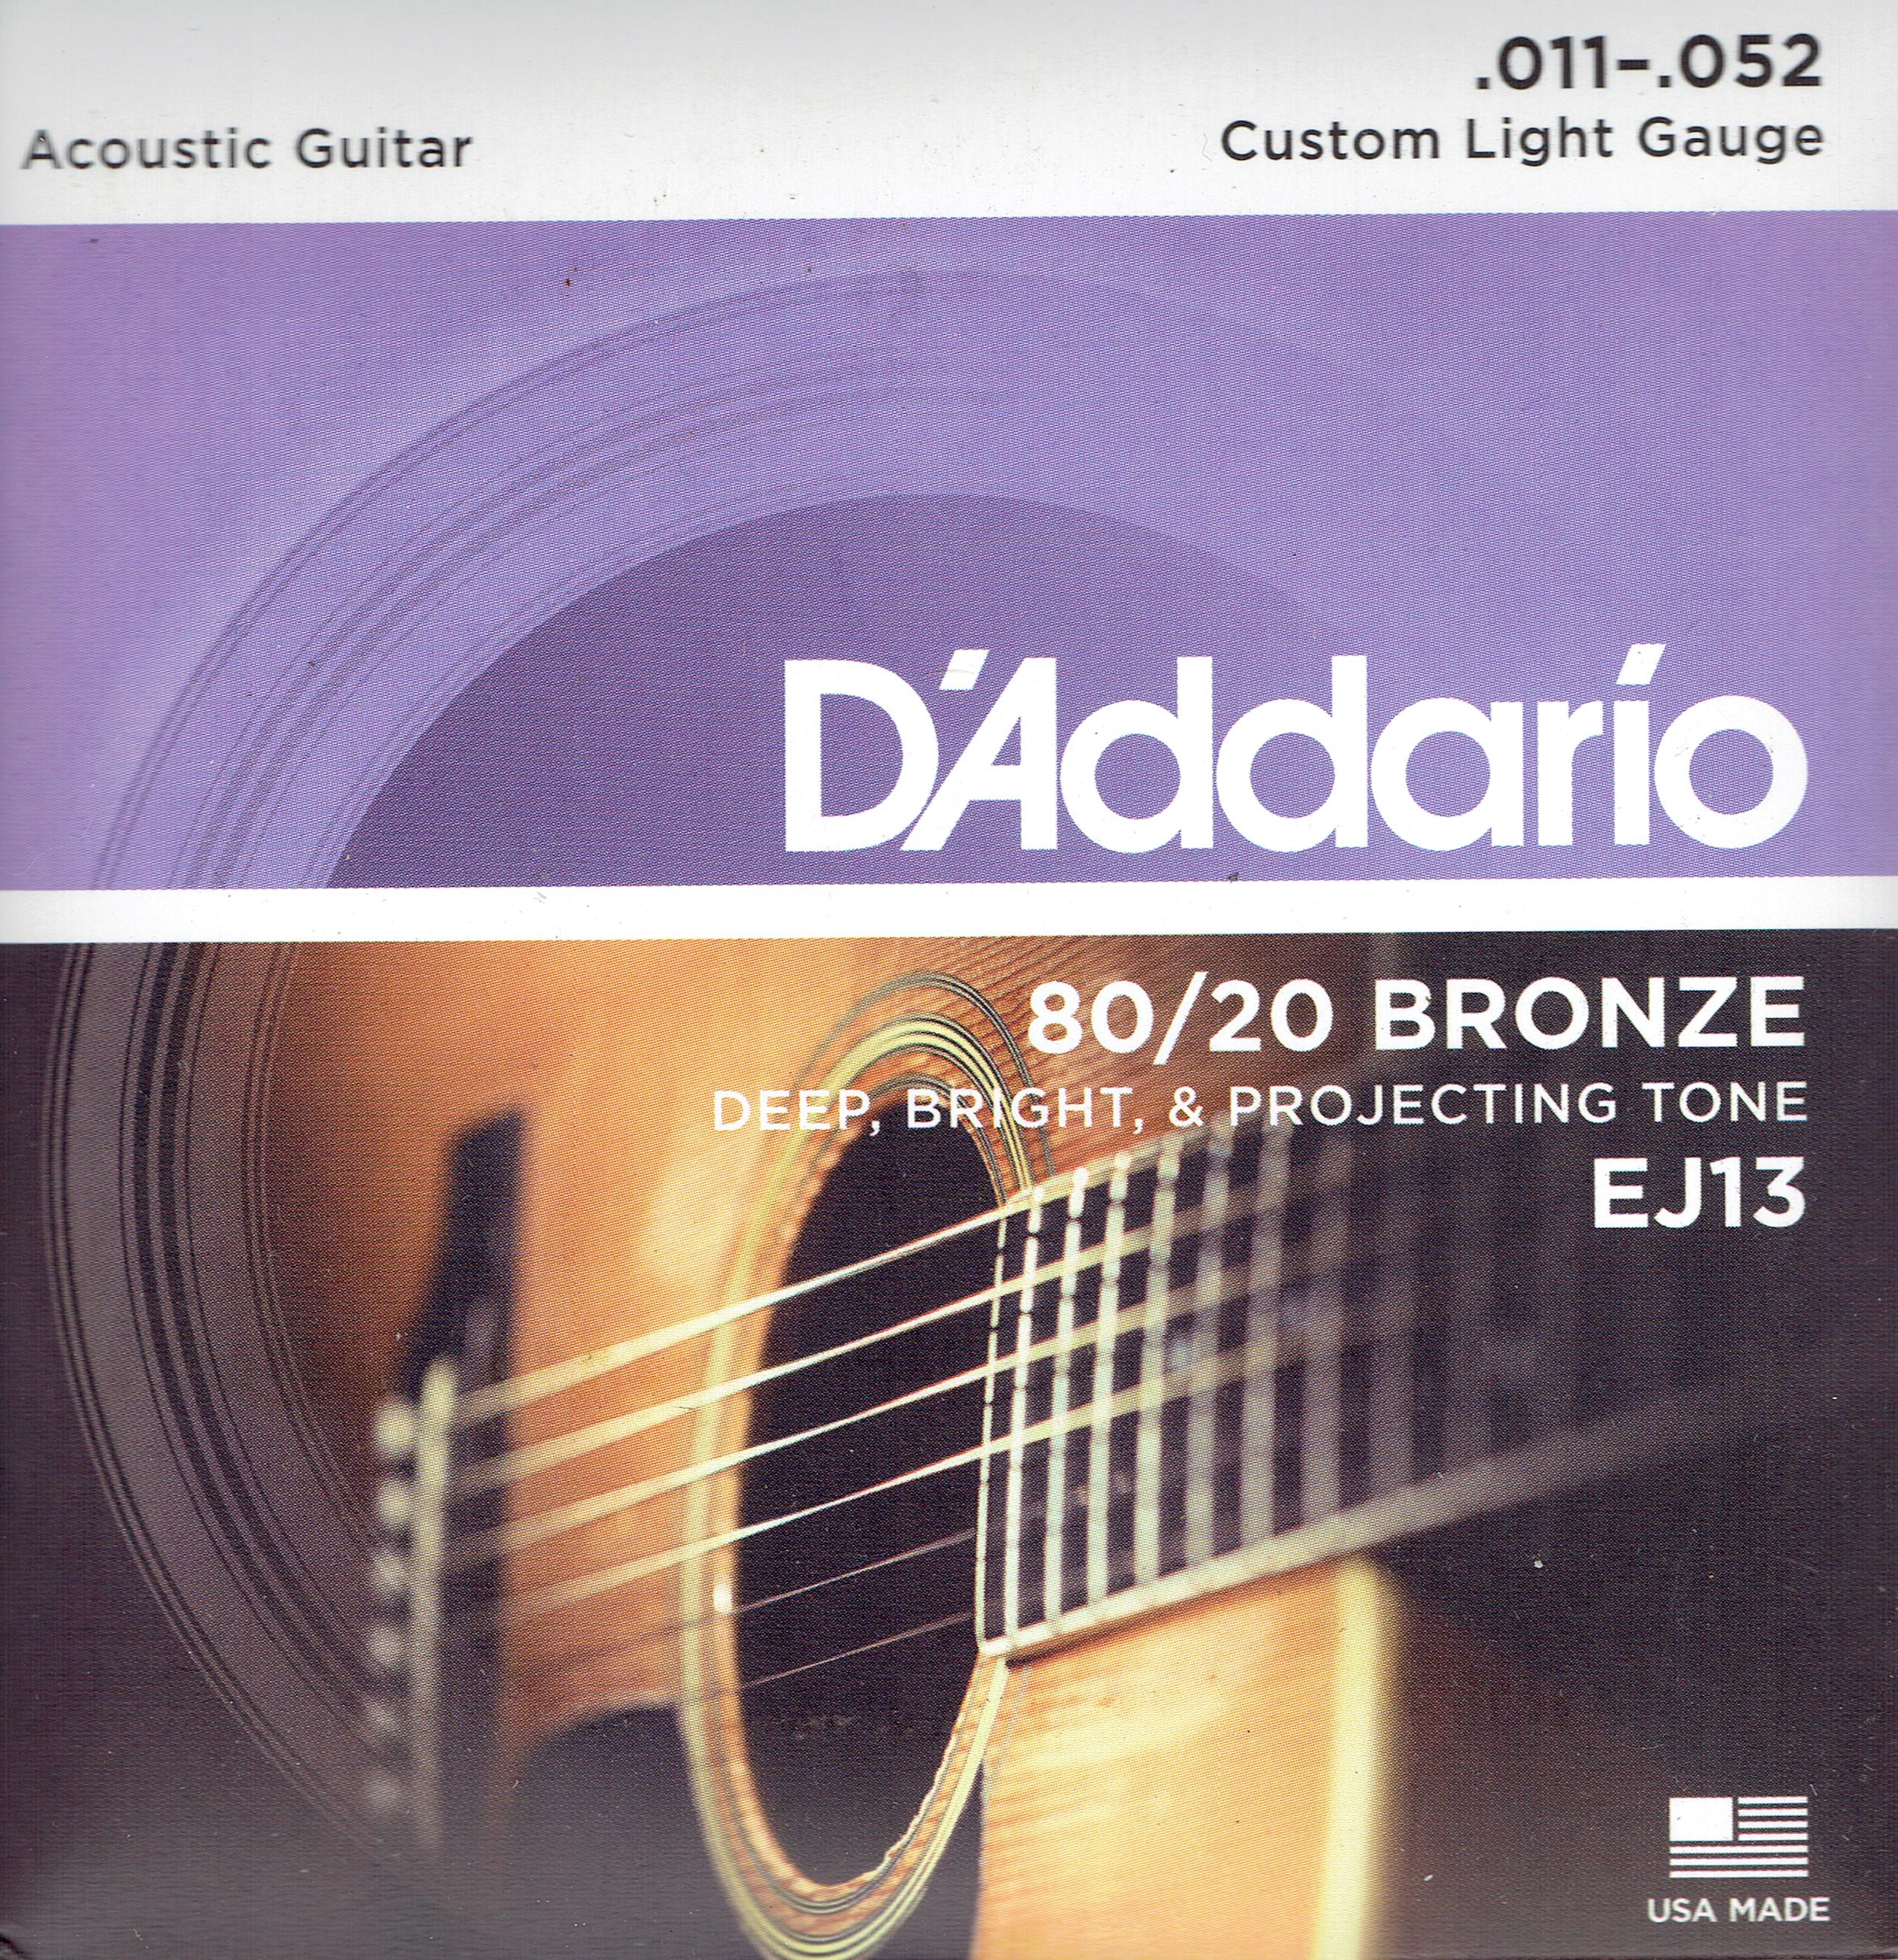 D\'Addario, 80/20 bronze acoustic guitar strings 11-52 EJ13